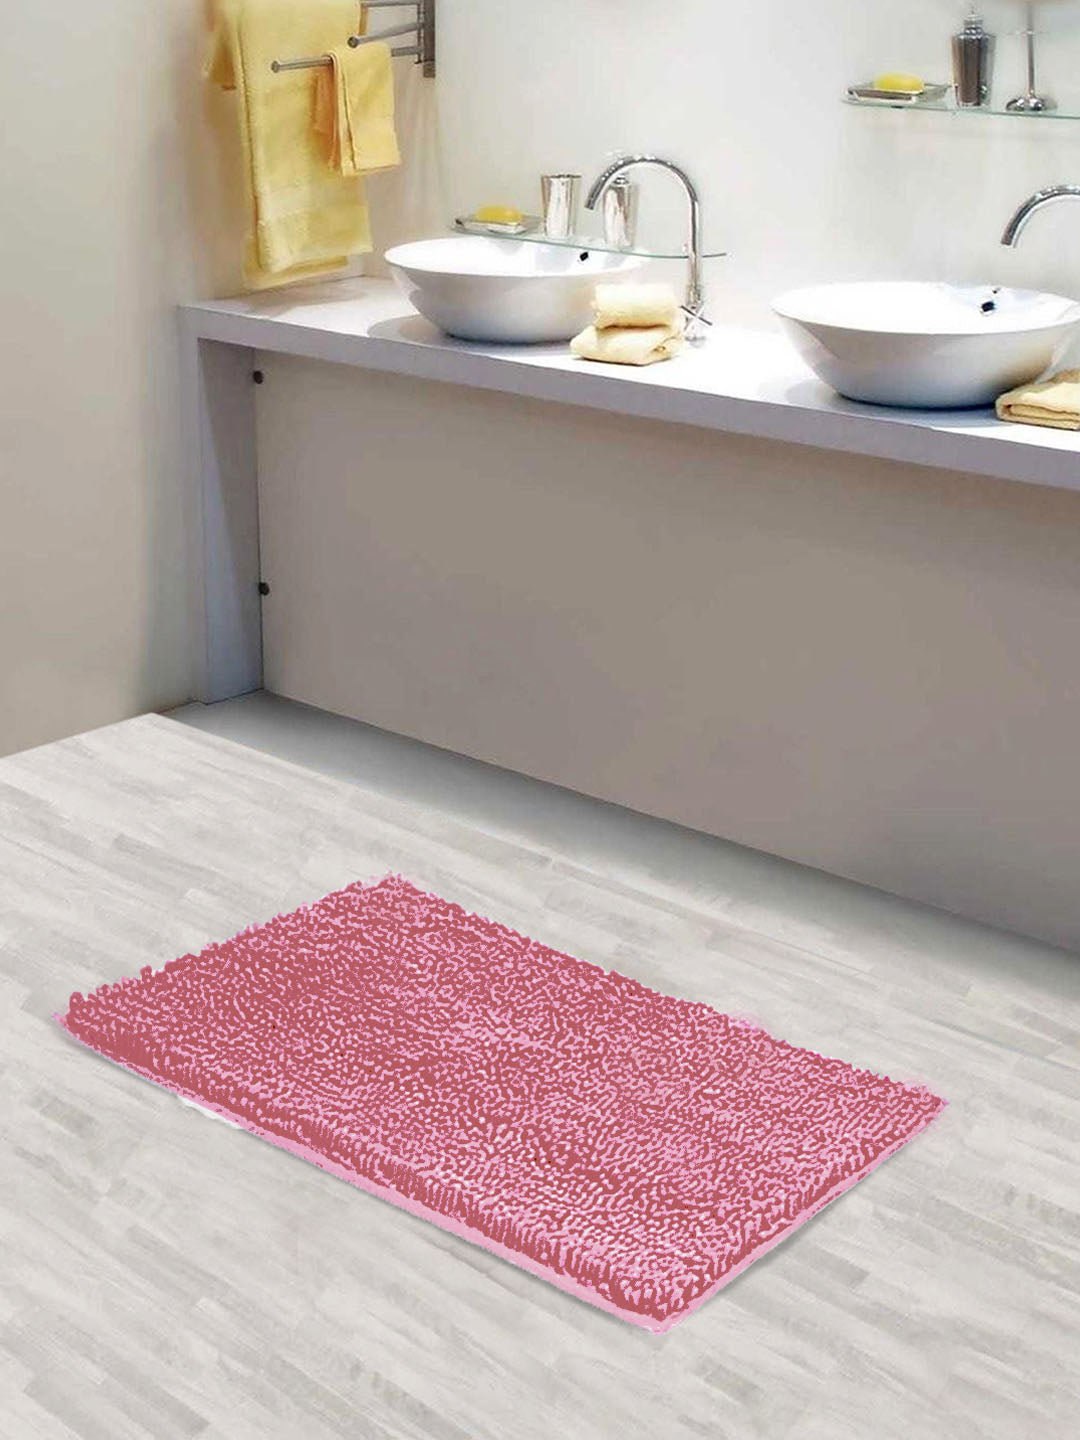 Lushomes Bathroom Mat, 1800 GSM Floor Mat with High Pile Microfiber, anti skid mat for bathroom floor, bath mat, door mats for bathroom (16 x 24 Inch, Single Pc, Pink)